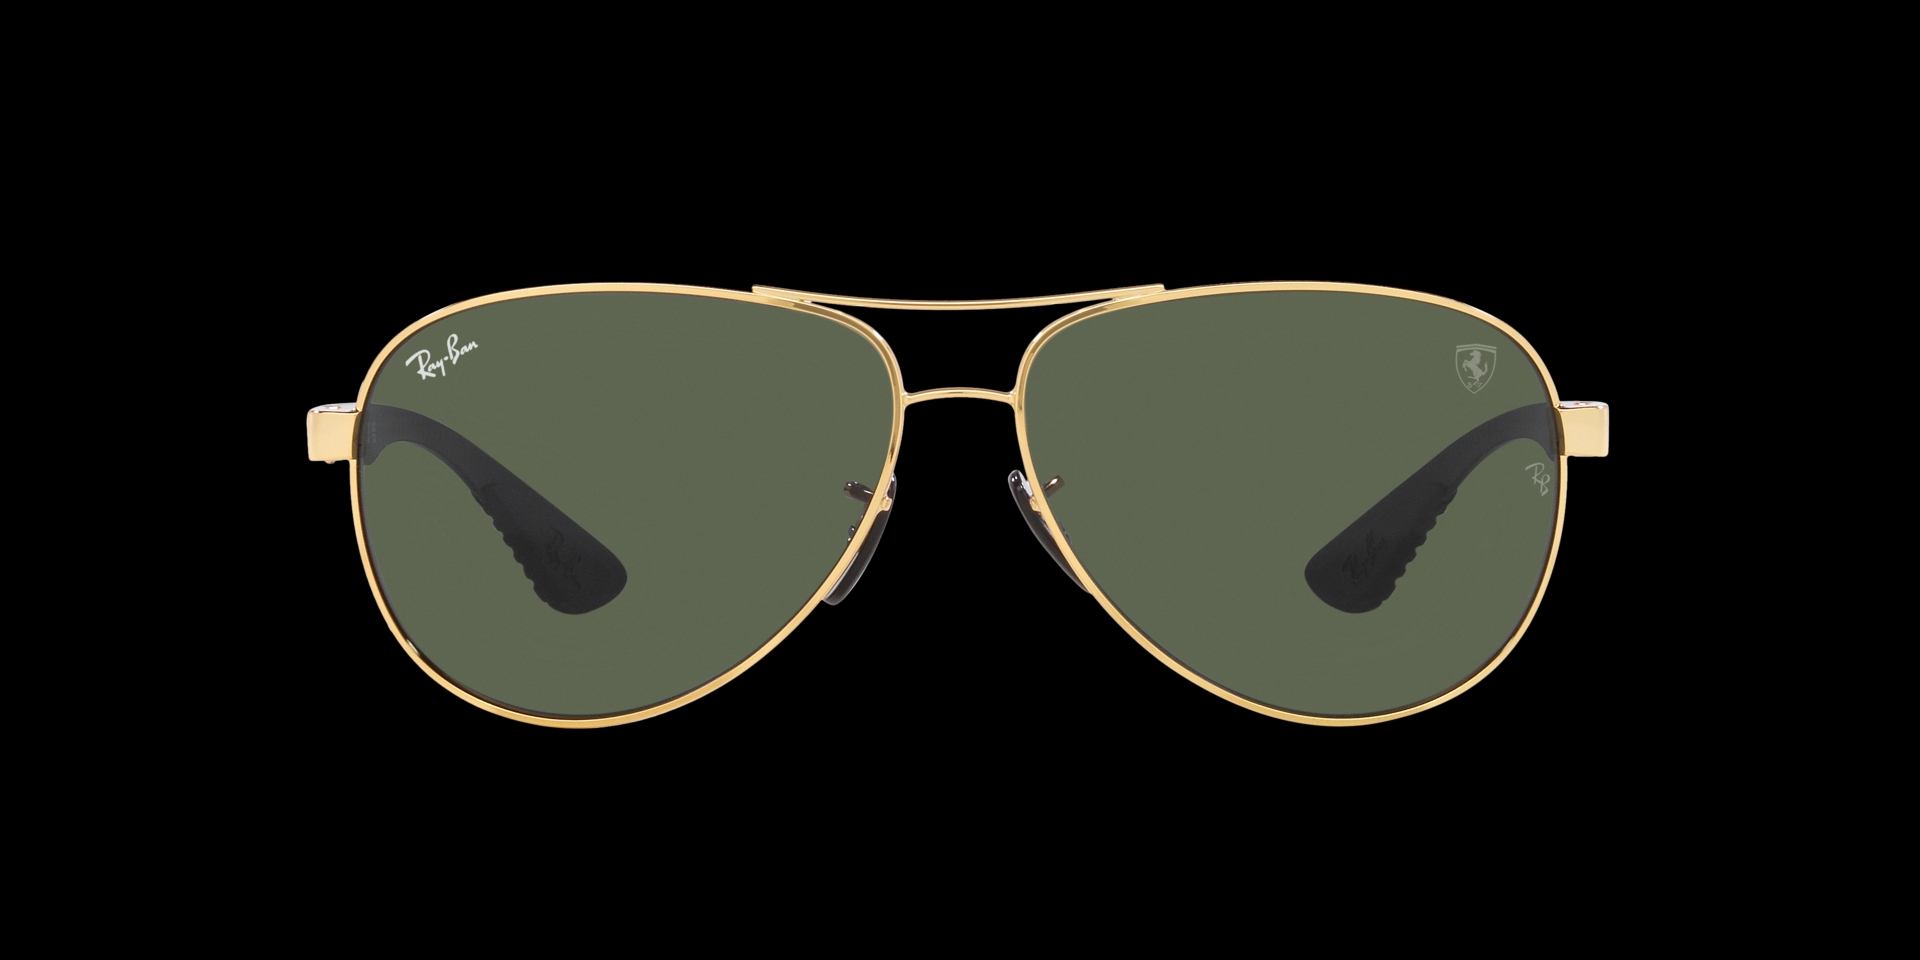 Black Sunglasses - Buy Black Sunglasses online in India